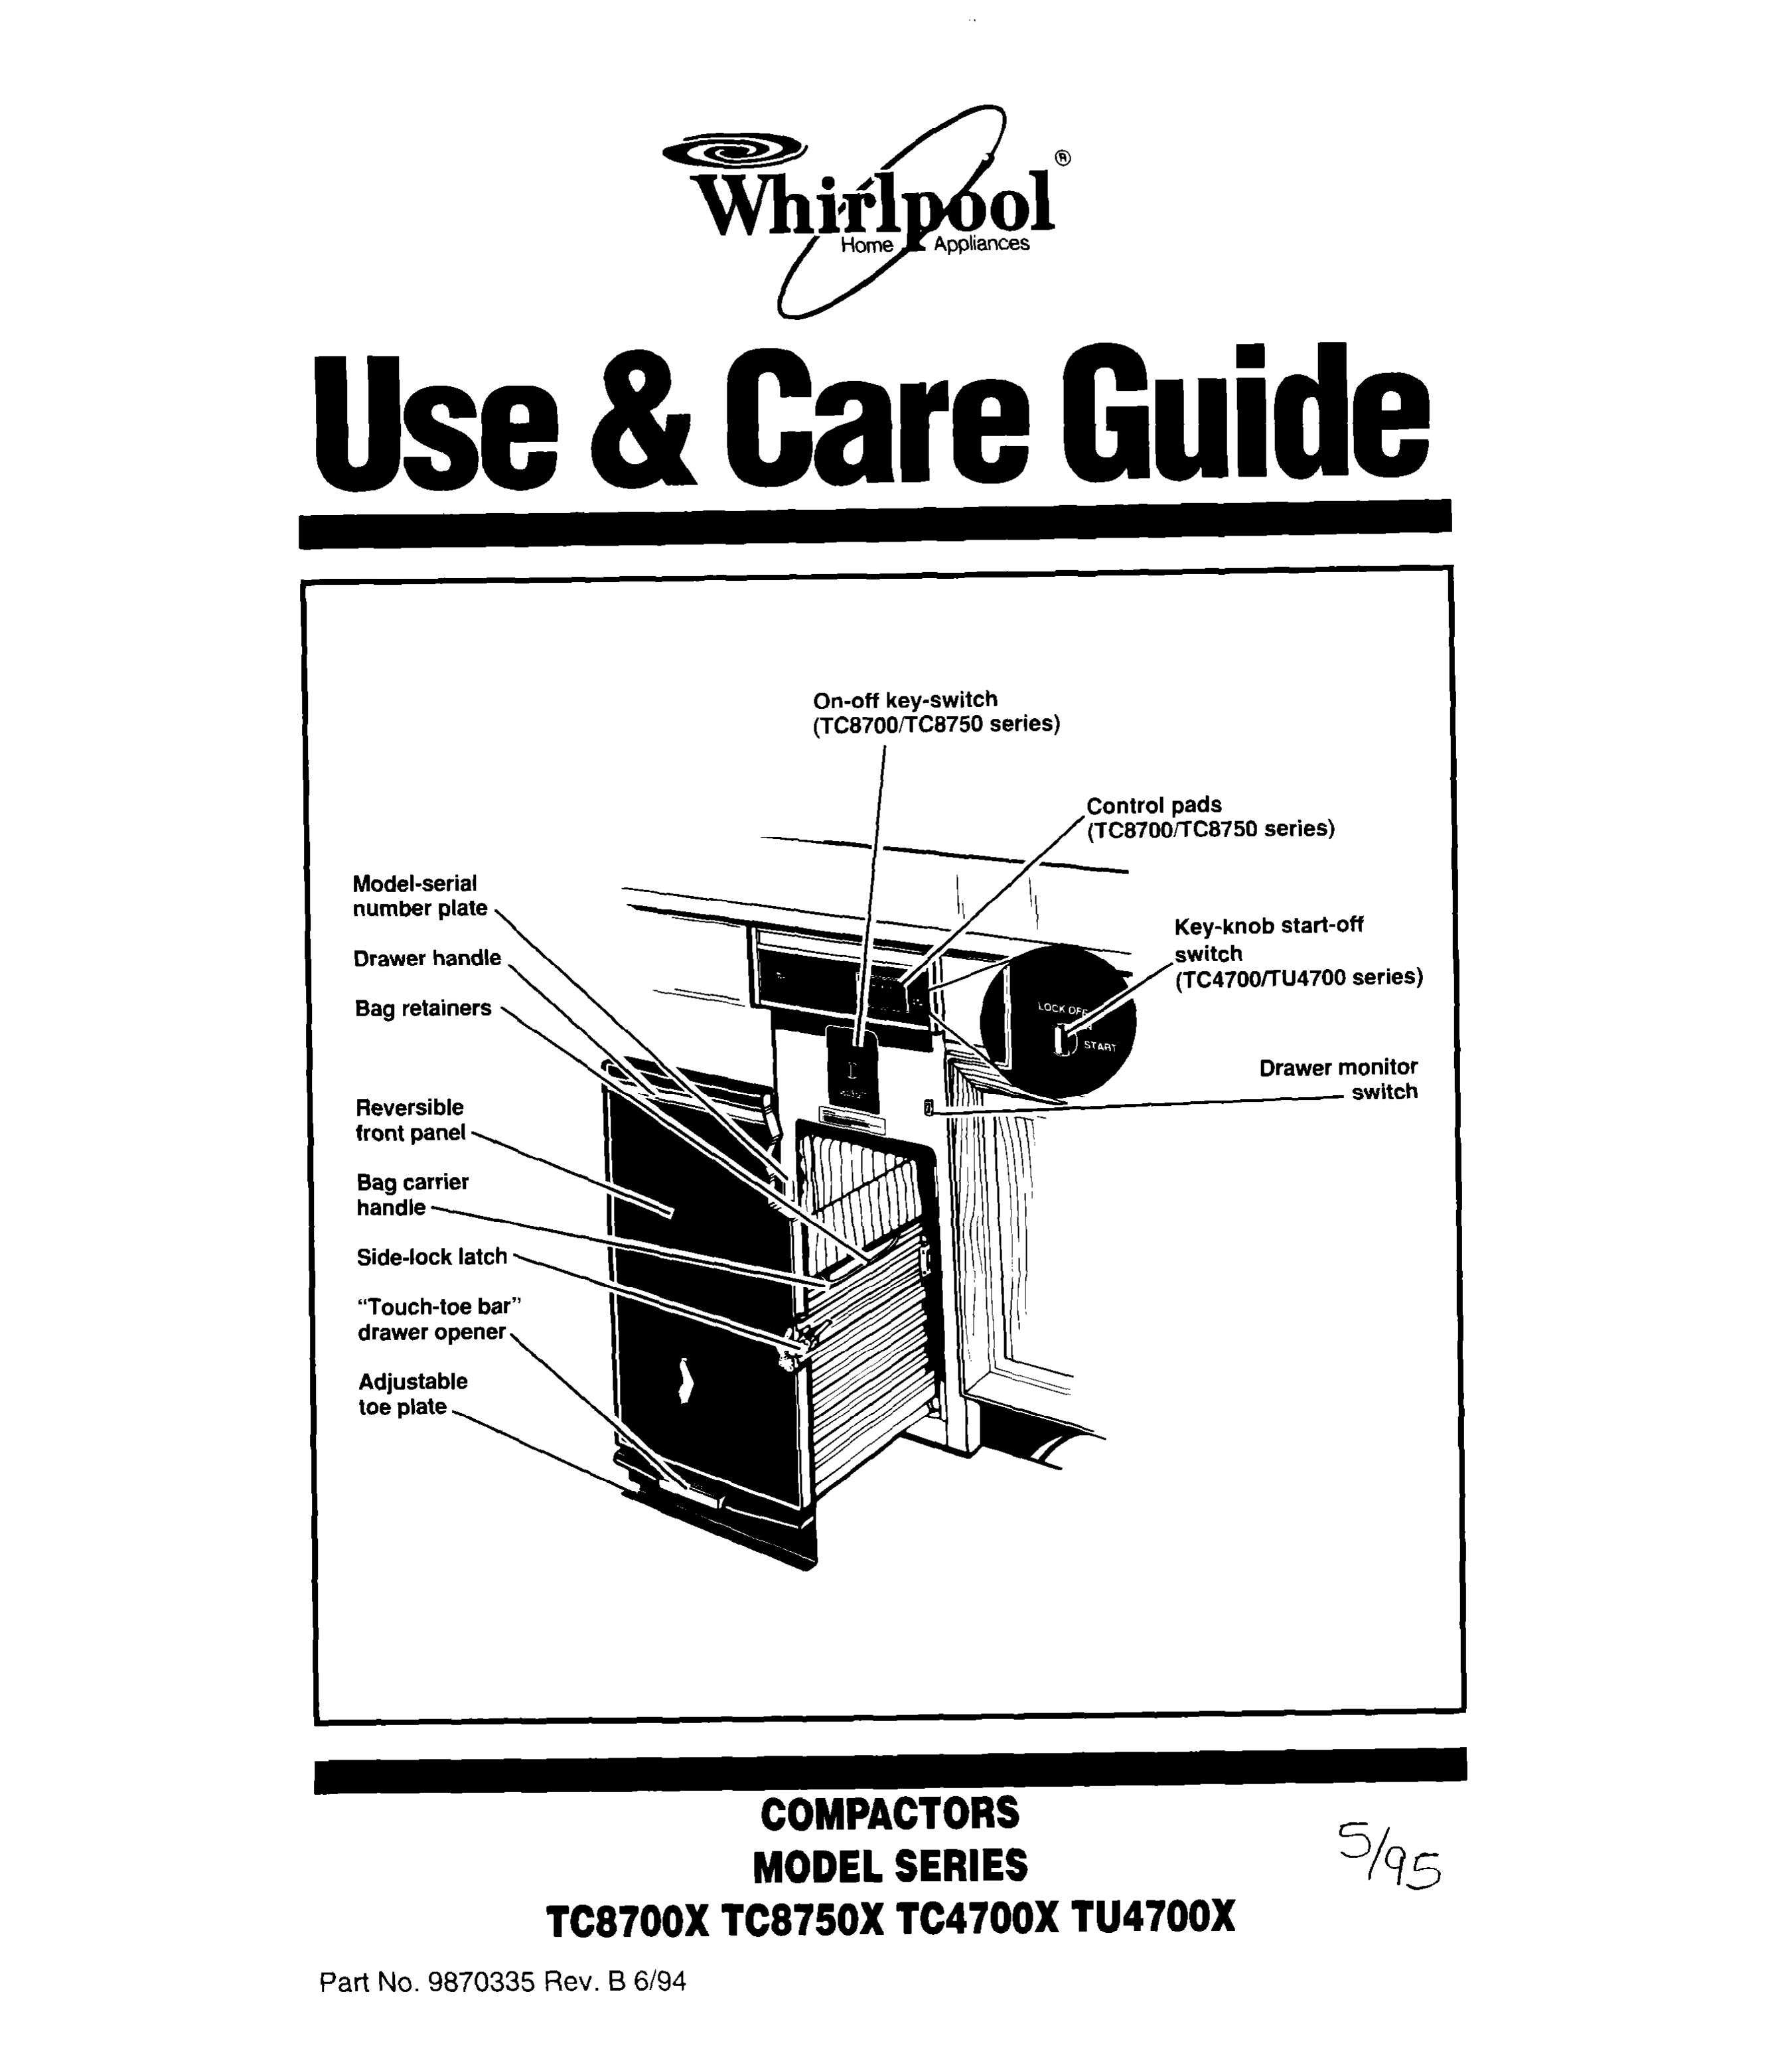 Whirlpool TC4700X Trash Compactor User Manual